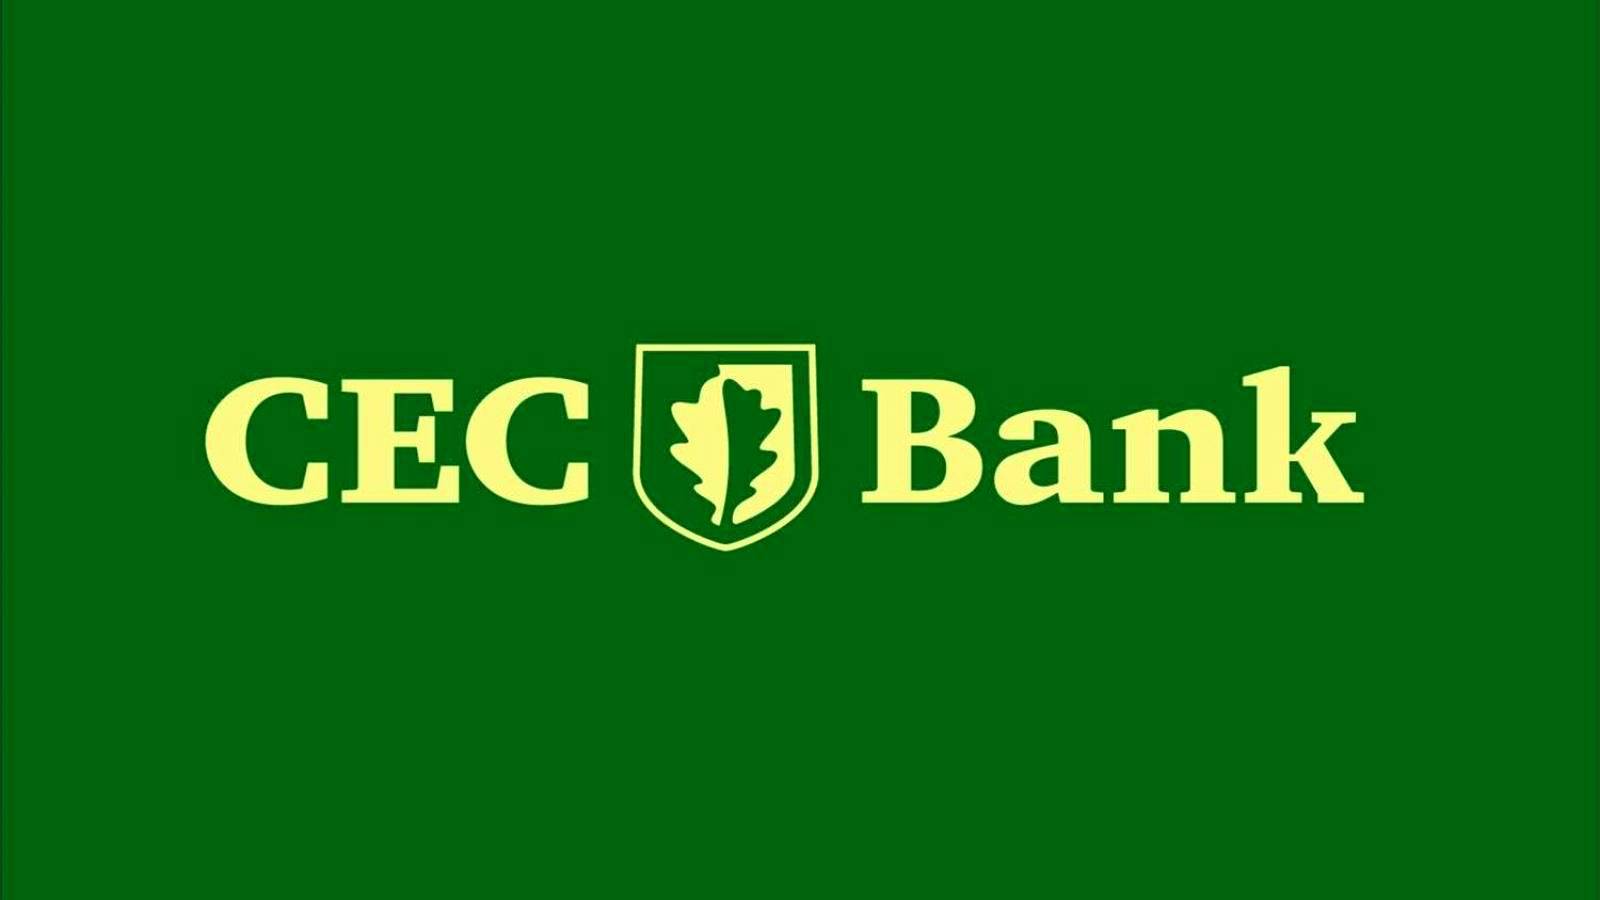 CEC Bank Anuntul URGENT Clienti Trebuie Stie Acum